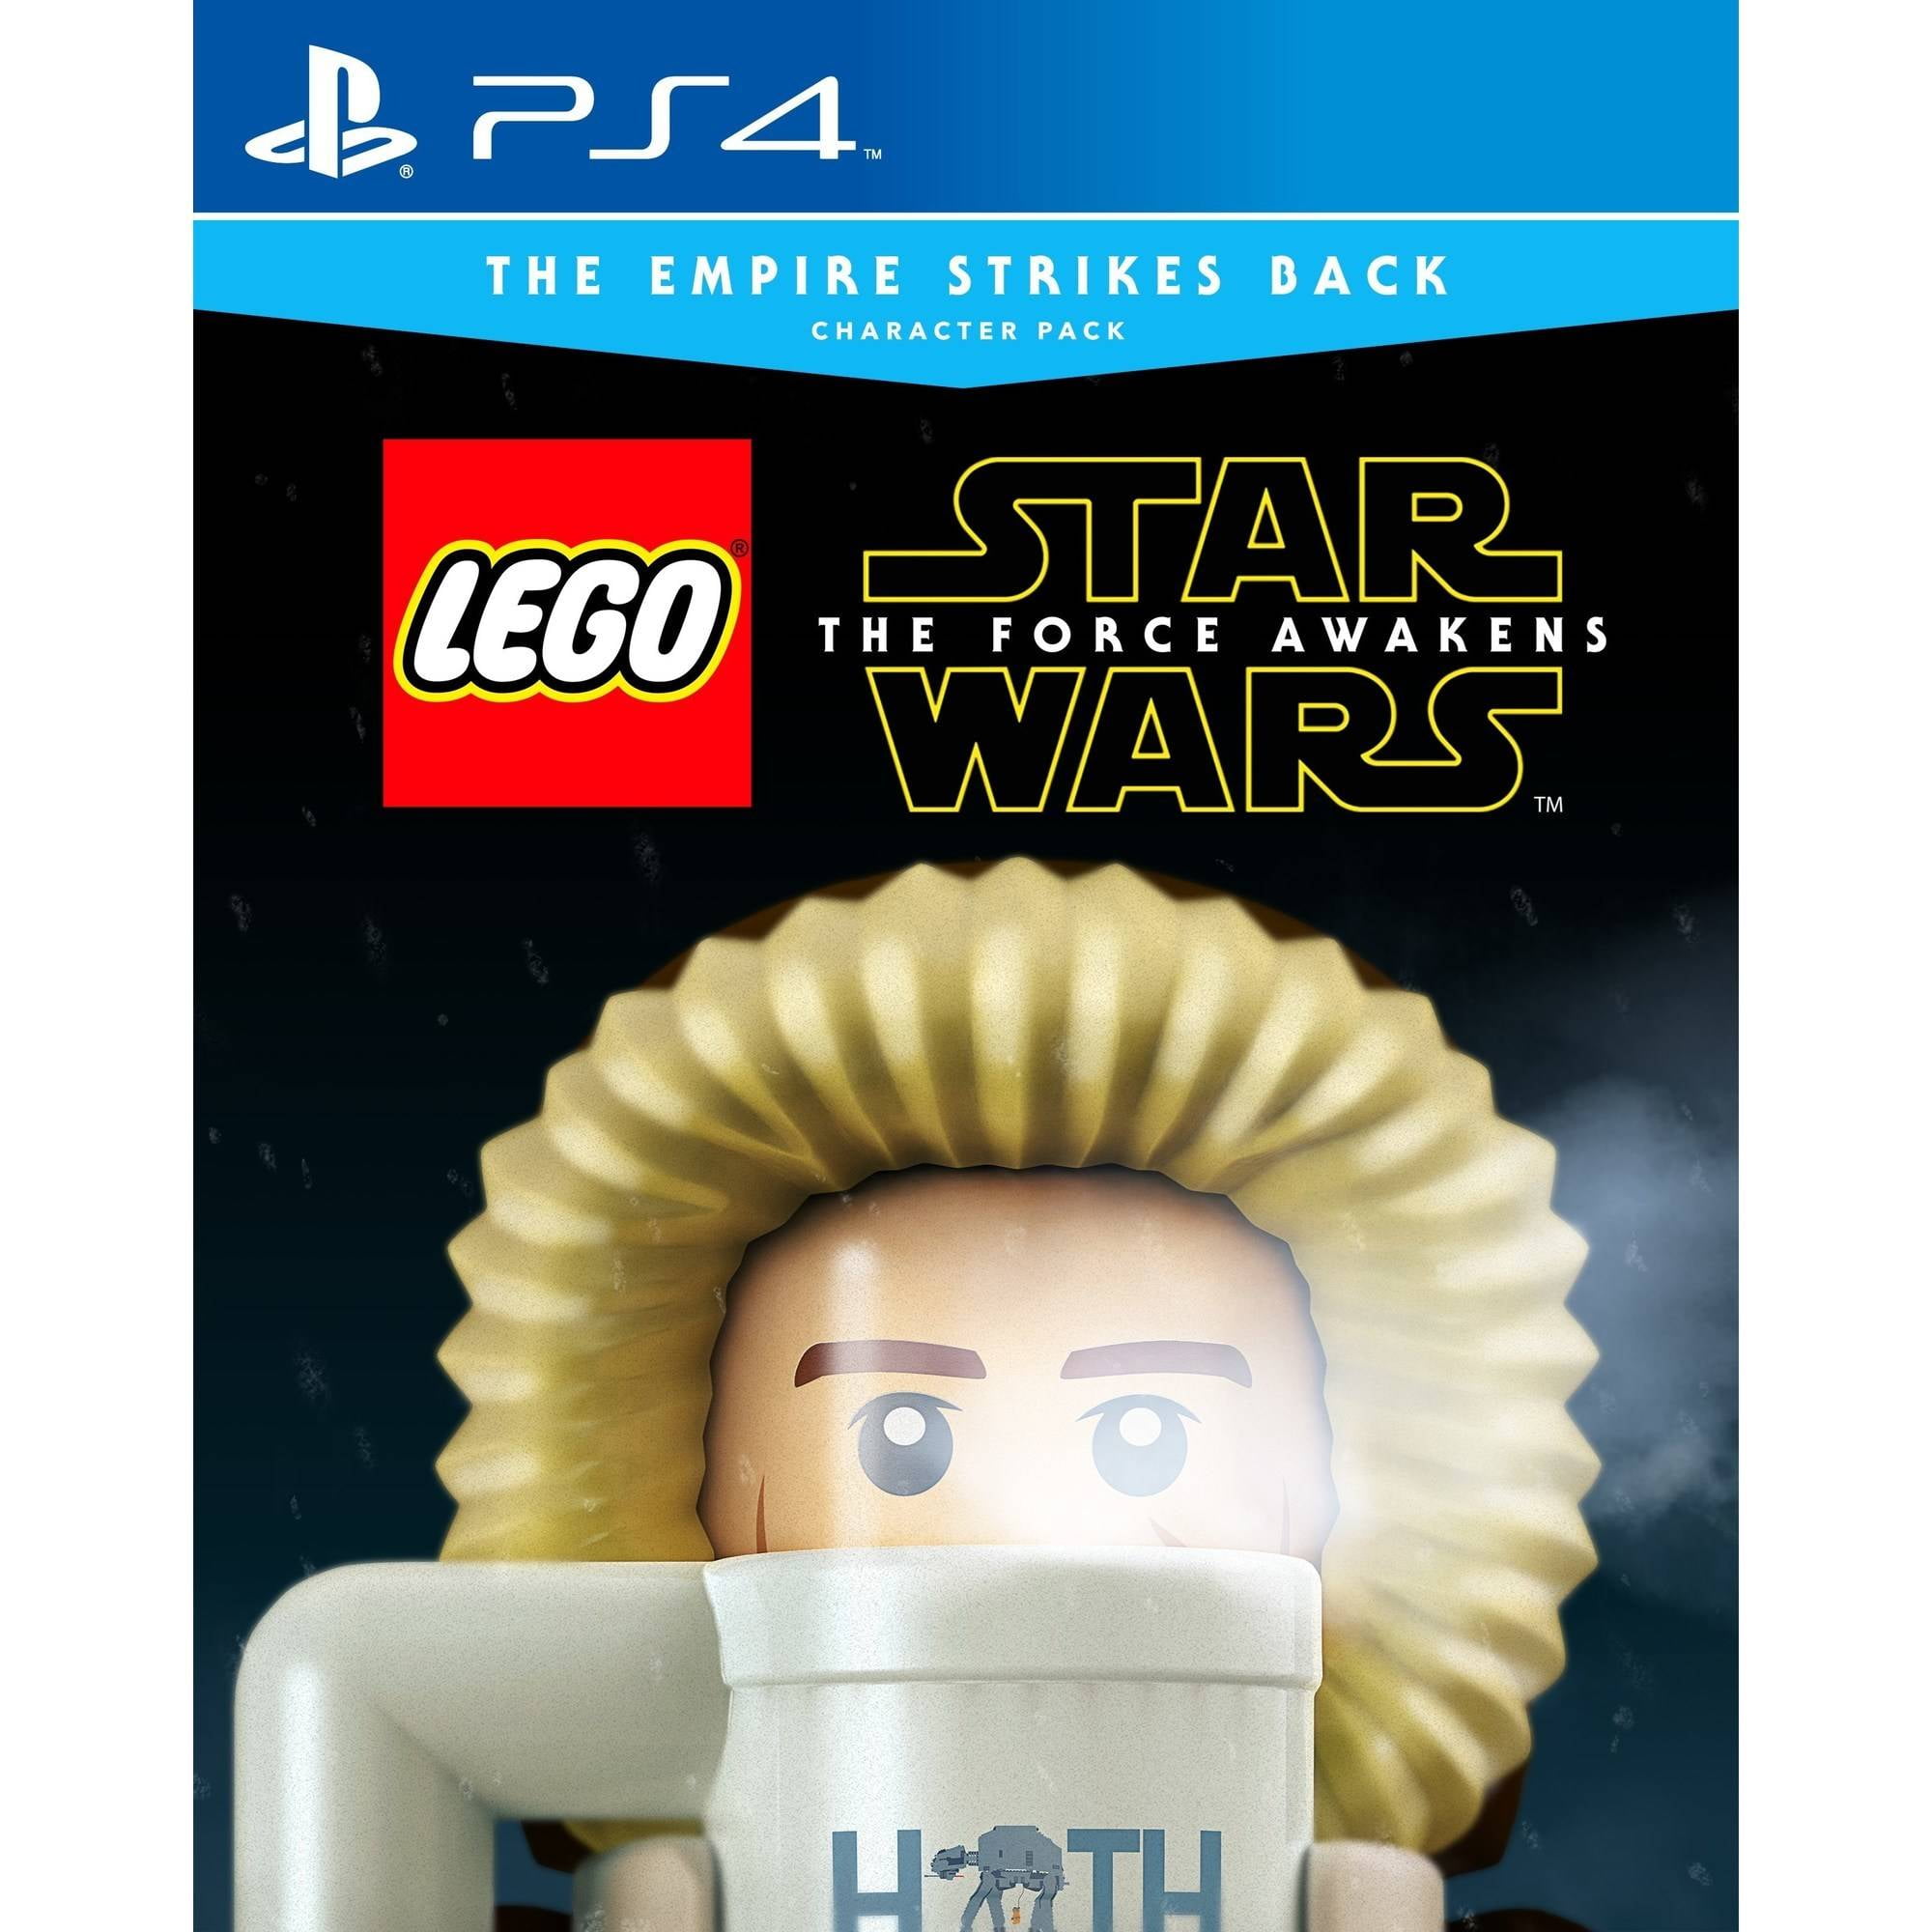 Warner Bros Lego Star Wars The Force Awakens Deluxe Edition Ps4 Walmart Com Walmart Com